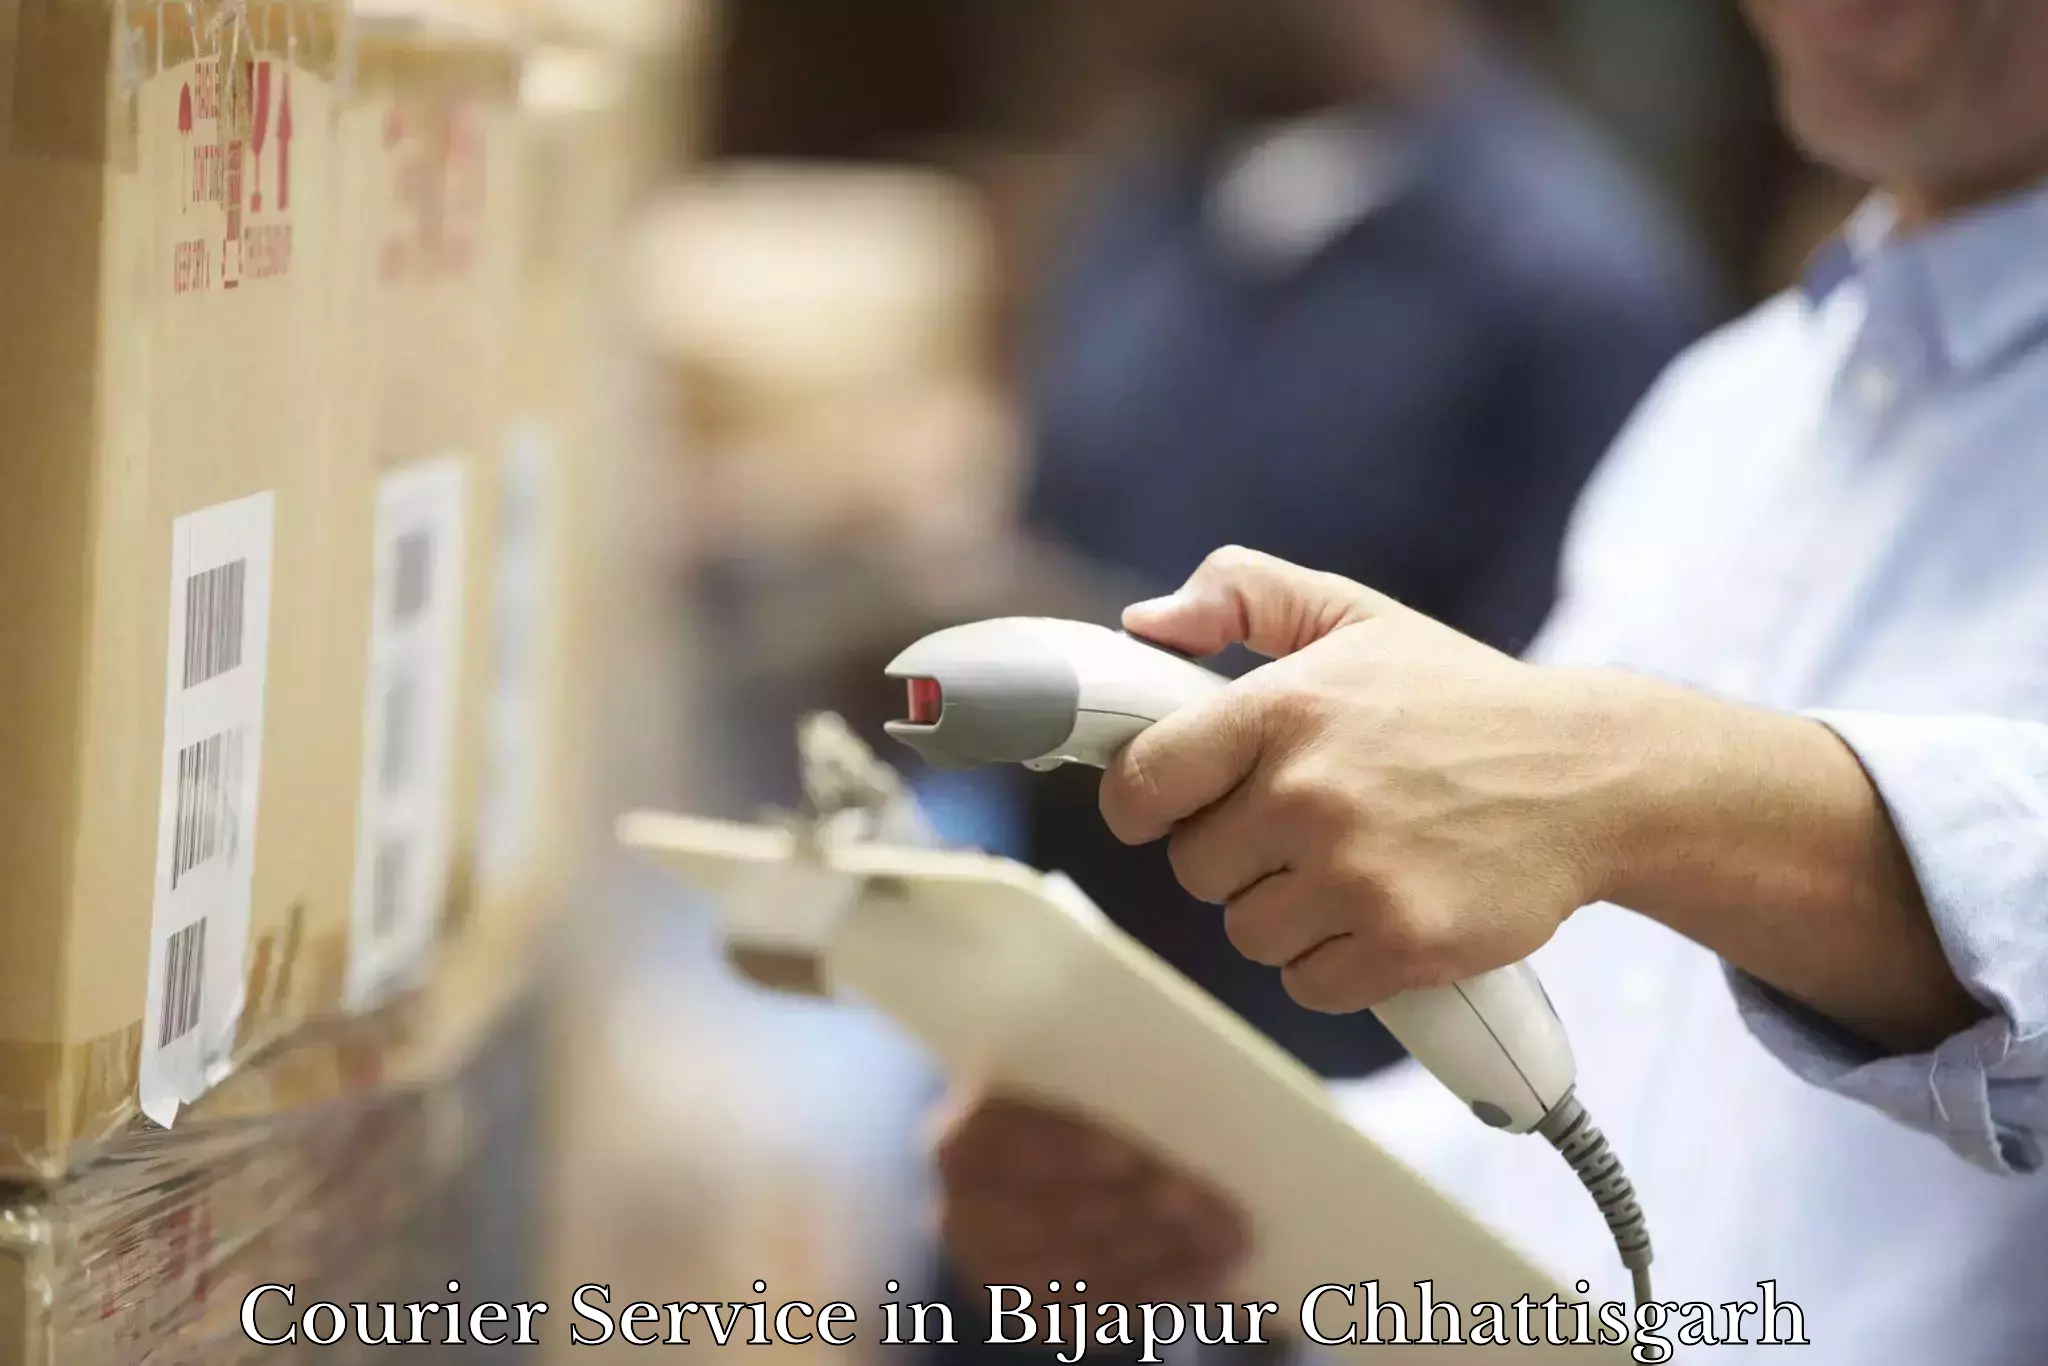 Next-day delivery options in Bijapur Chhattisgarh